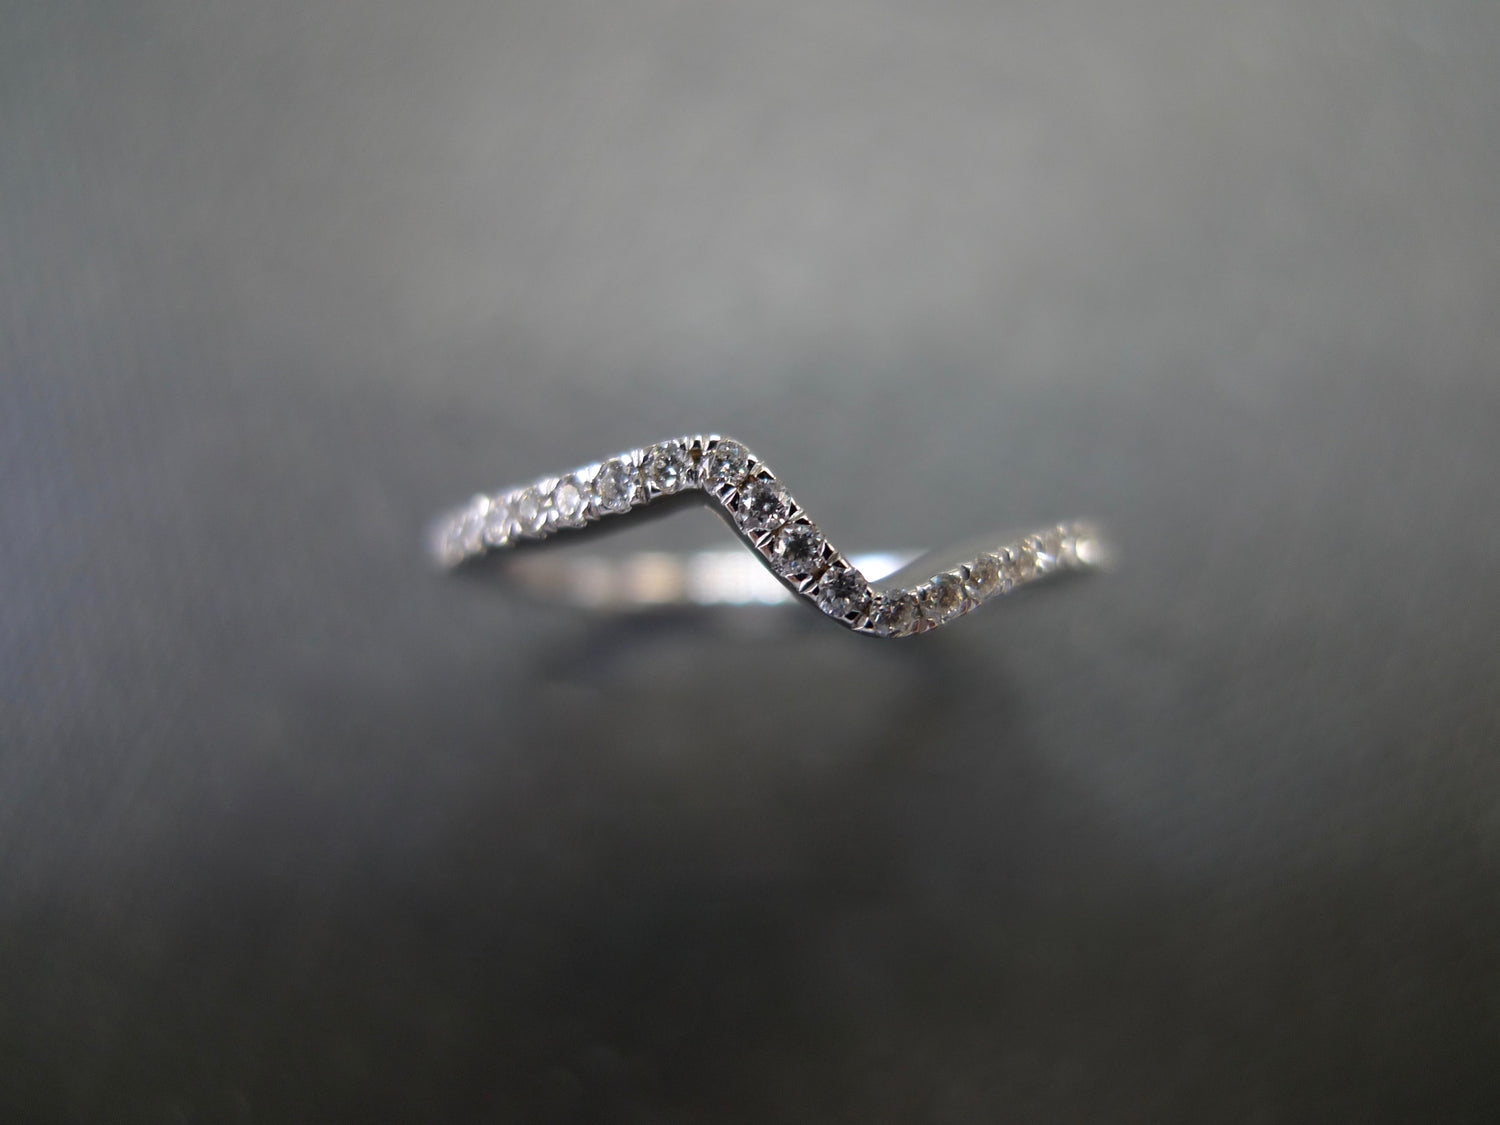 Thin Diamond Ring in 18K White Gold - HN JEWELRY